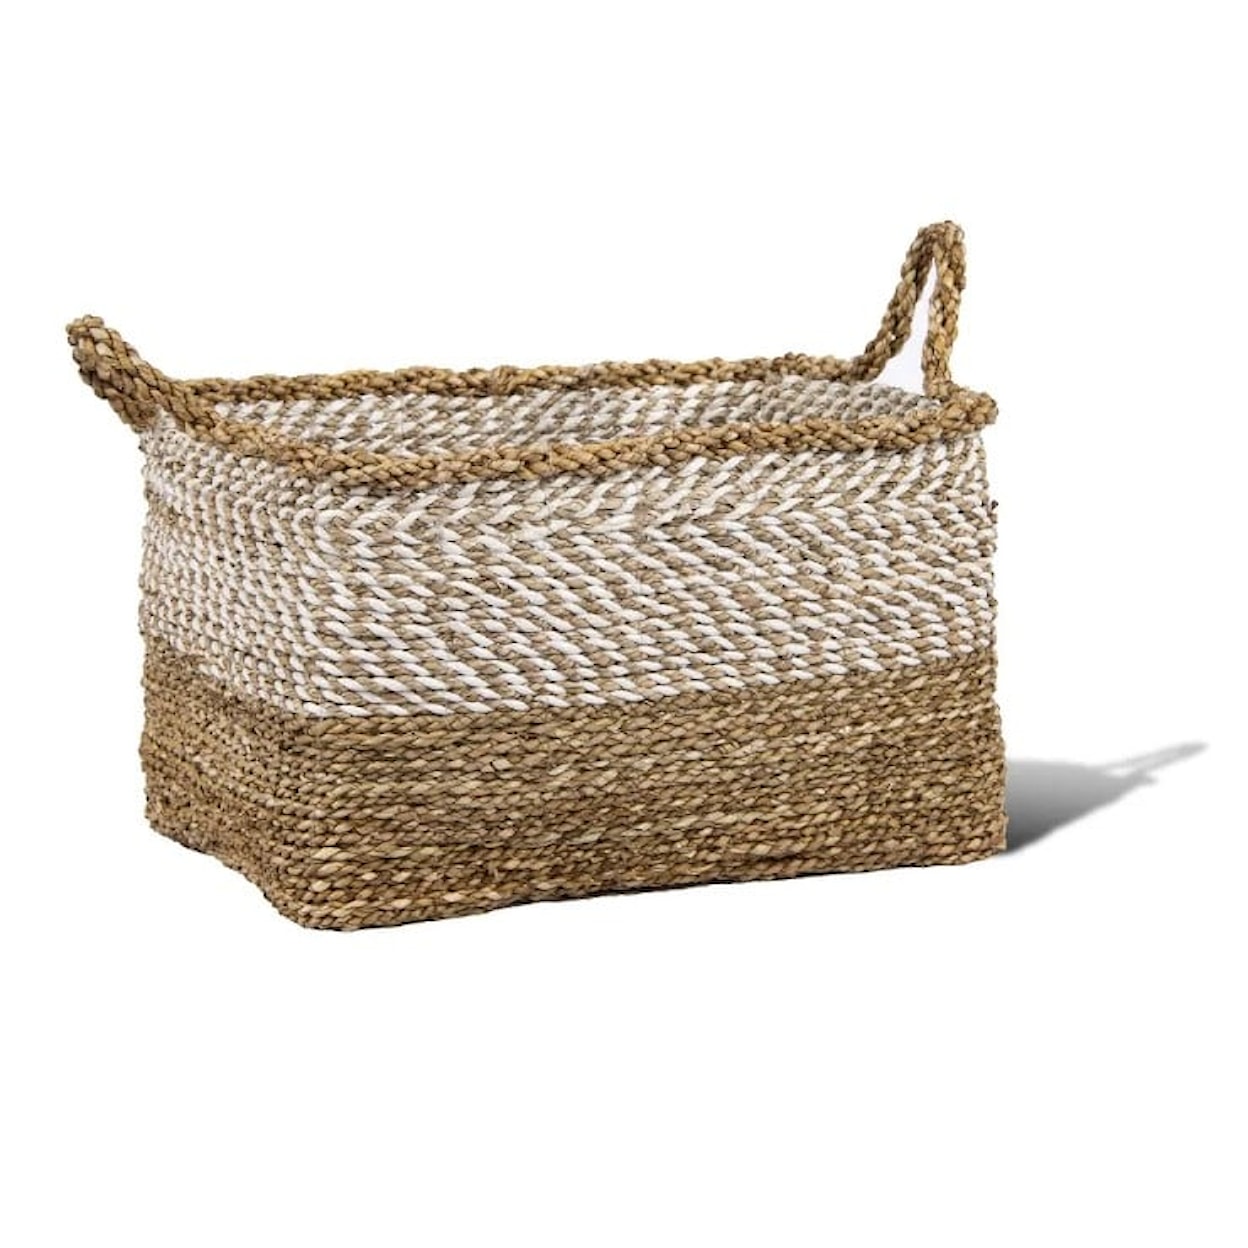 Ibolili Baskets and Sets BANANA LEAF SIMONE BASKET, RECT- S/3